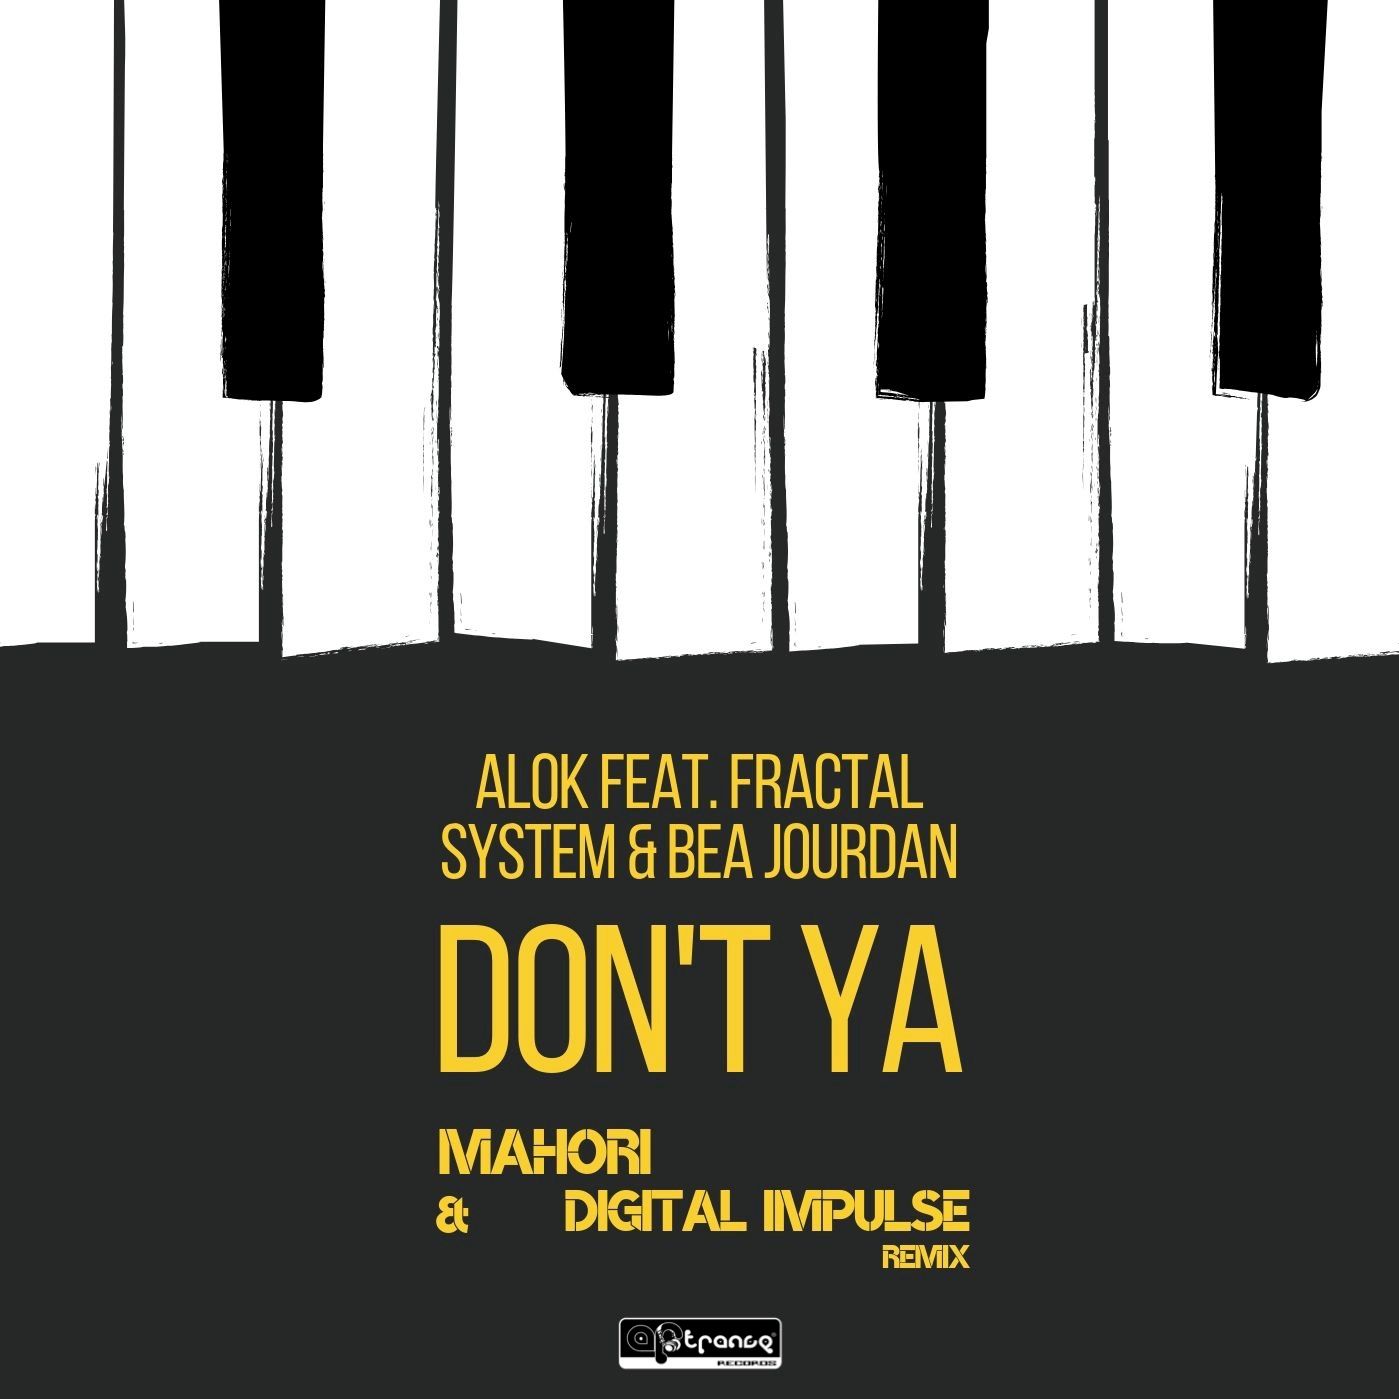 Khoasolla Alok & Fractal System ft Bea Jourdan - Don't Ya (Mahori & Digital Impulse remix) ★FREE DOWNLOAD★